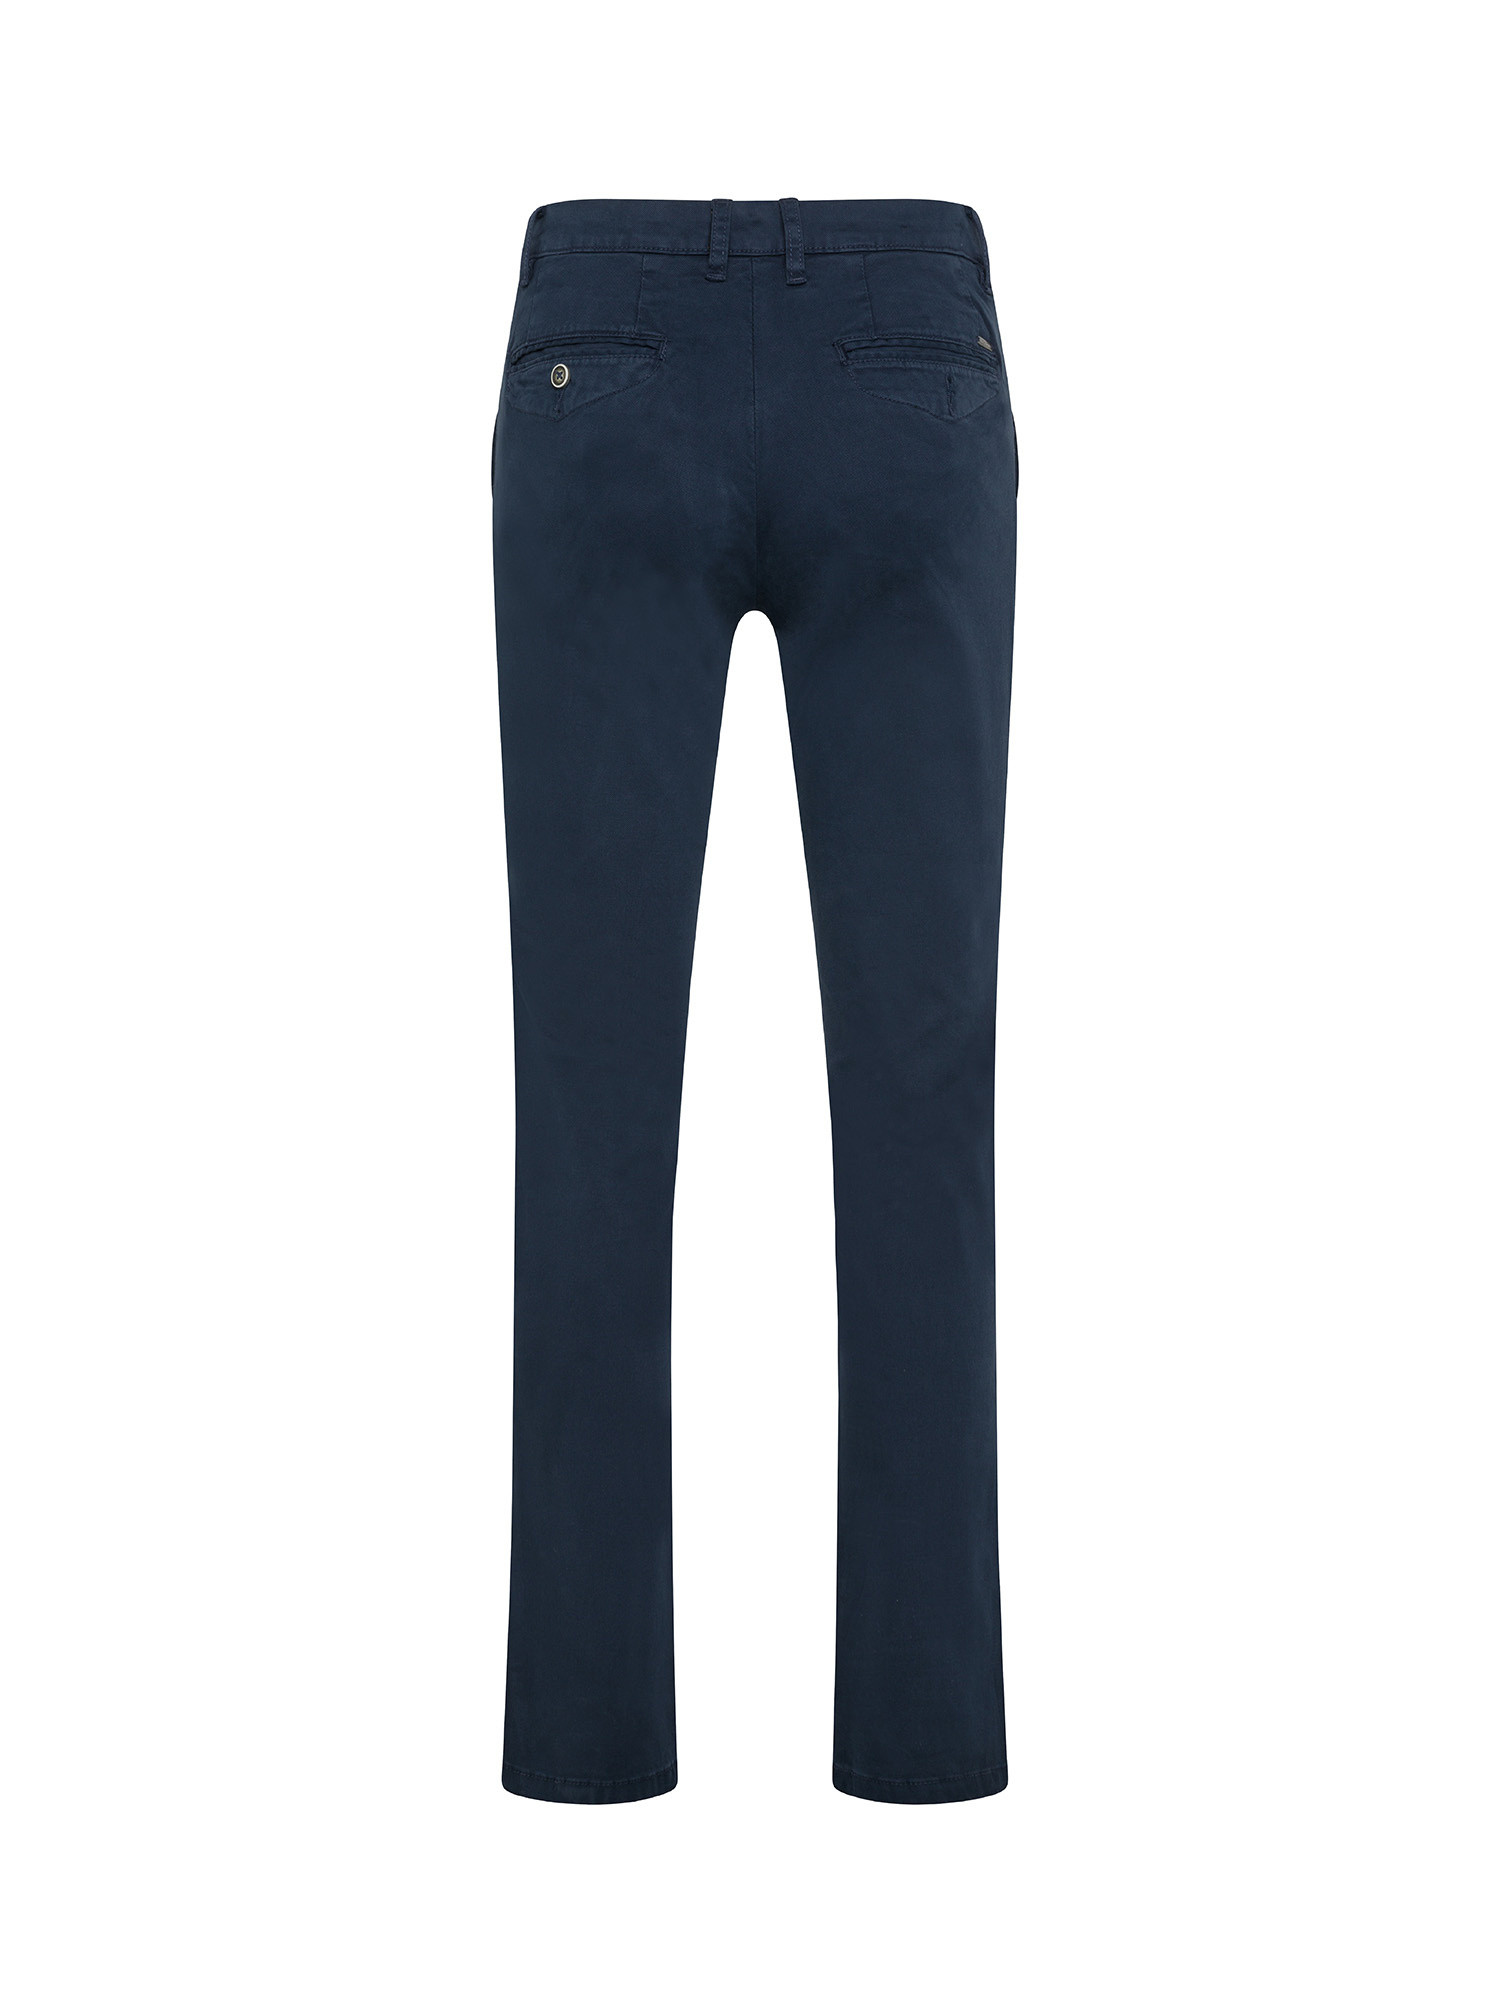 Jack & Jones - Pantaloni chino slim fit, Blu, large image number 1